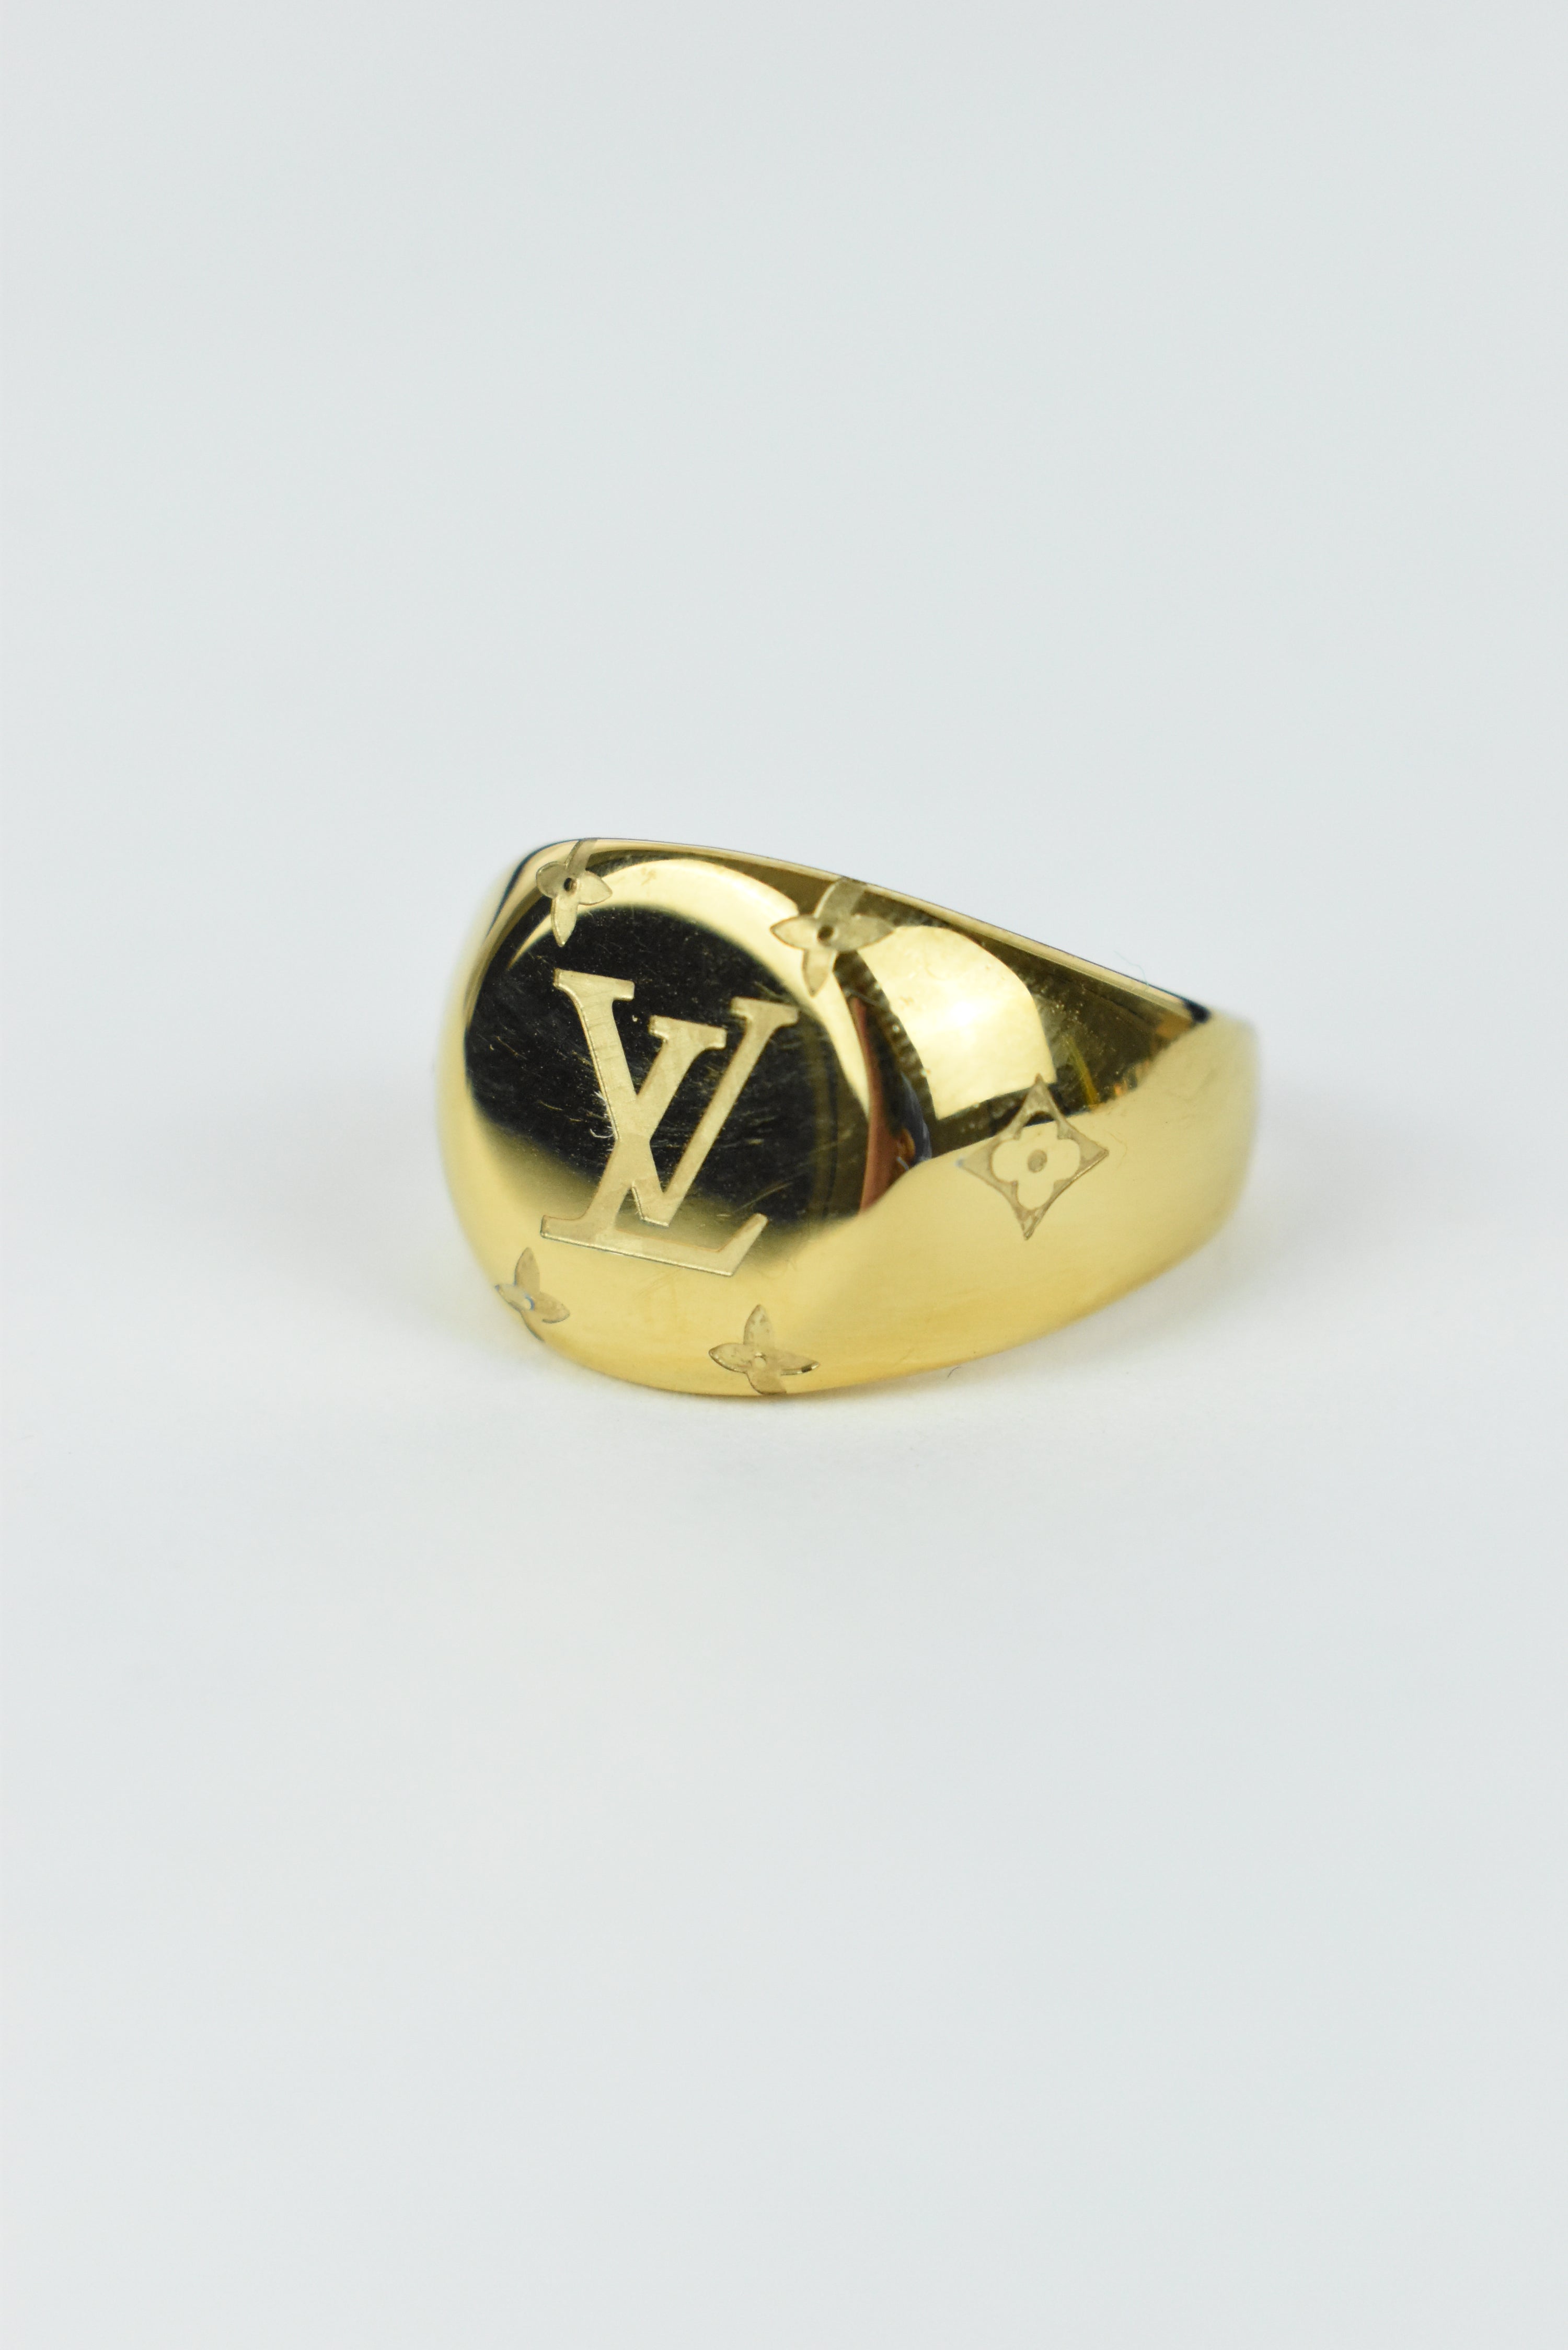 Louis Vitton Engraved Ring Bootleg Silver/Gold